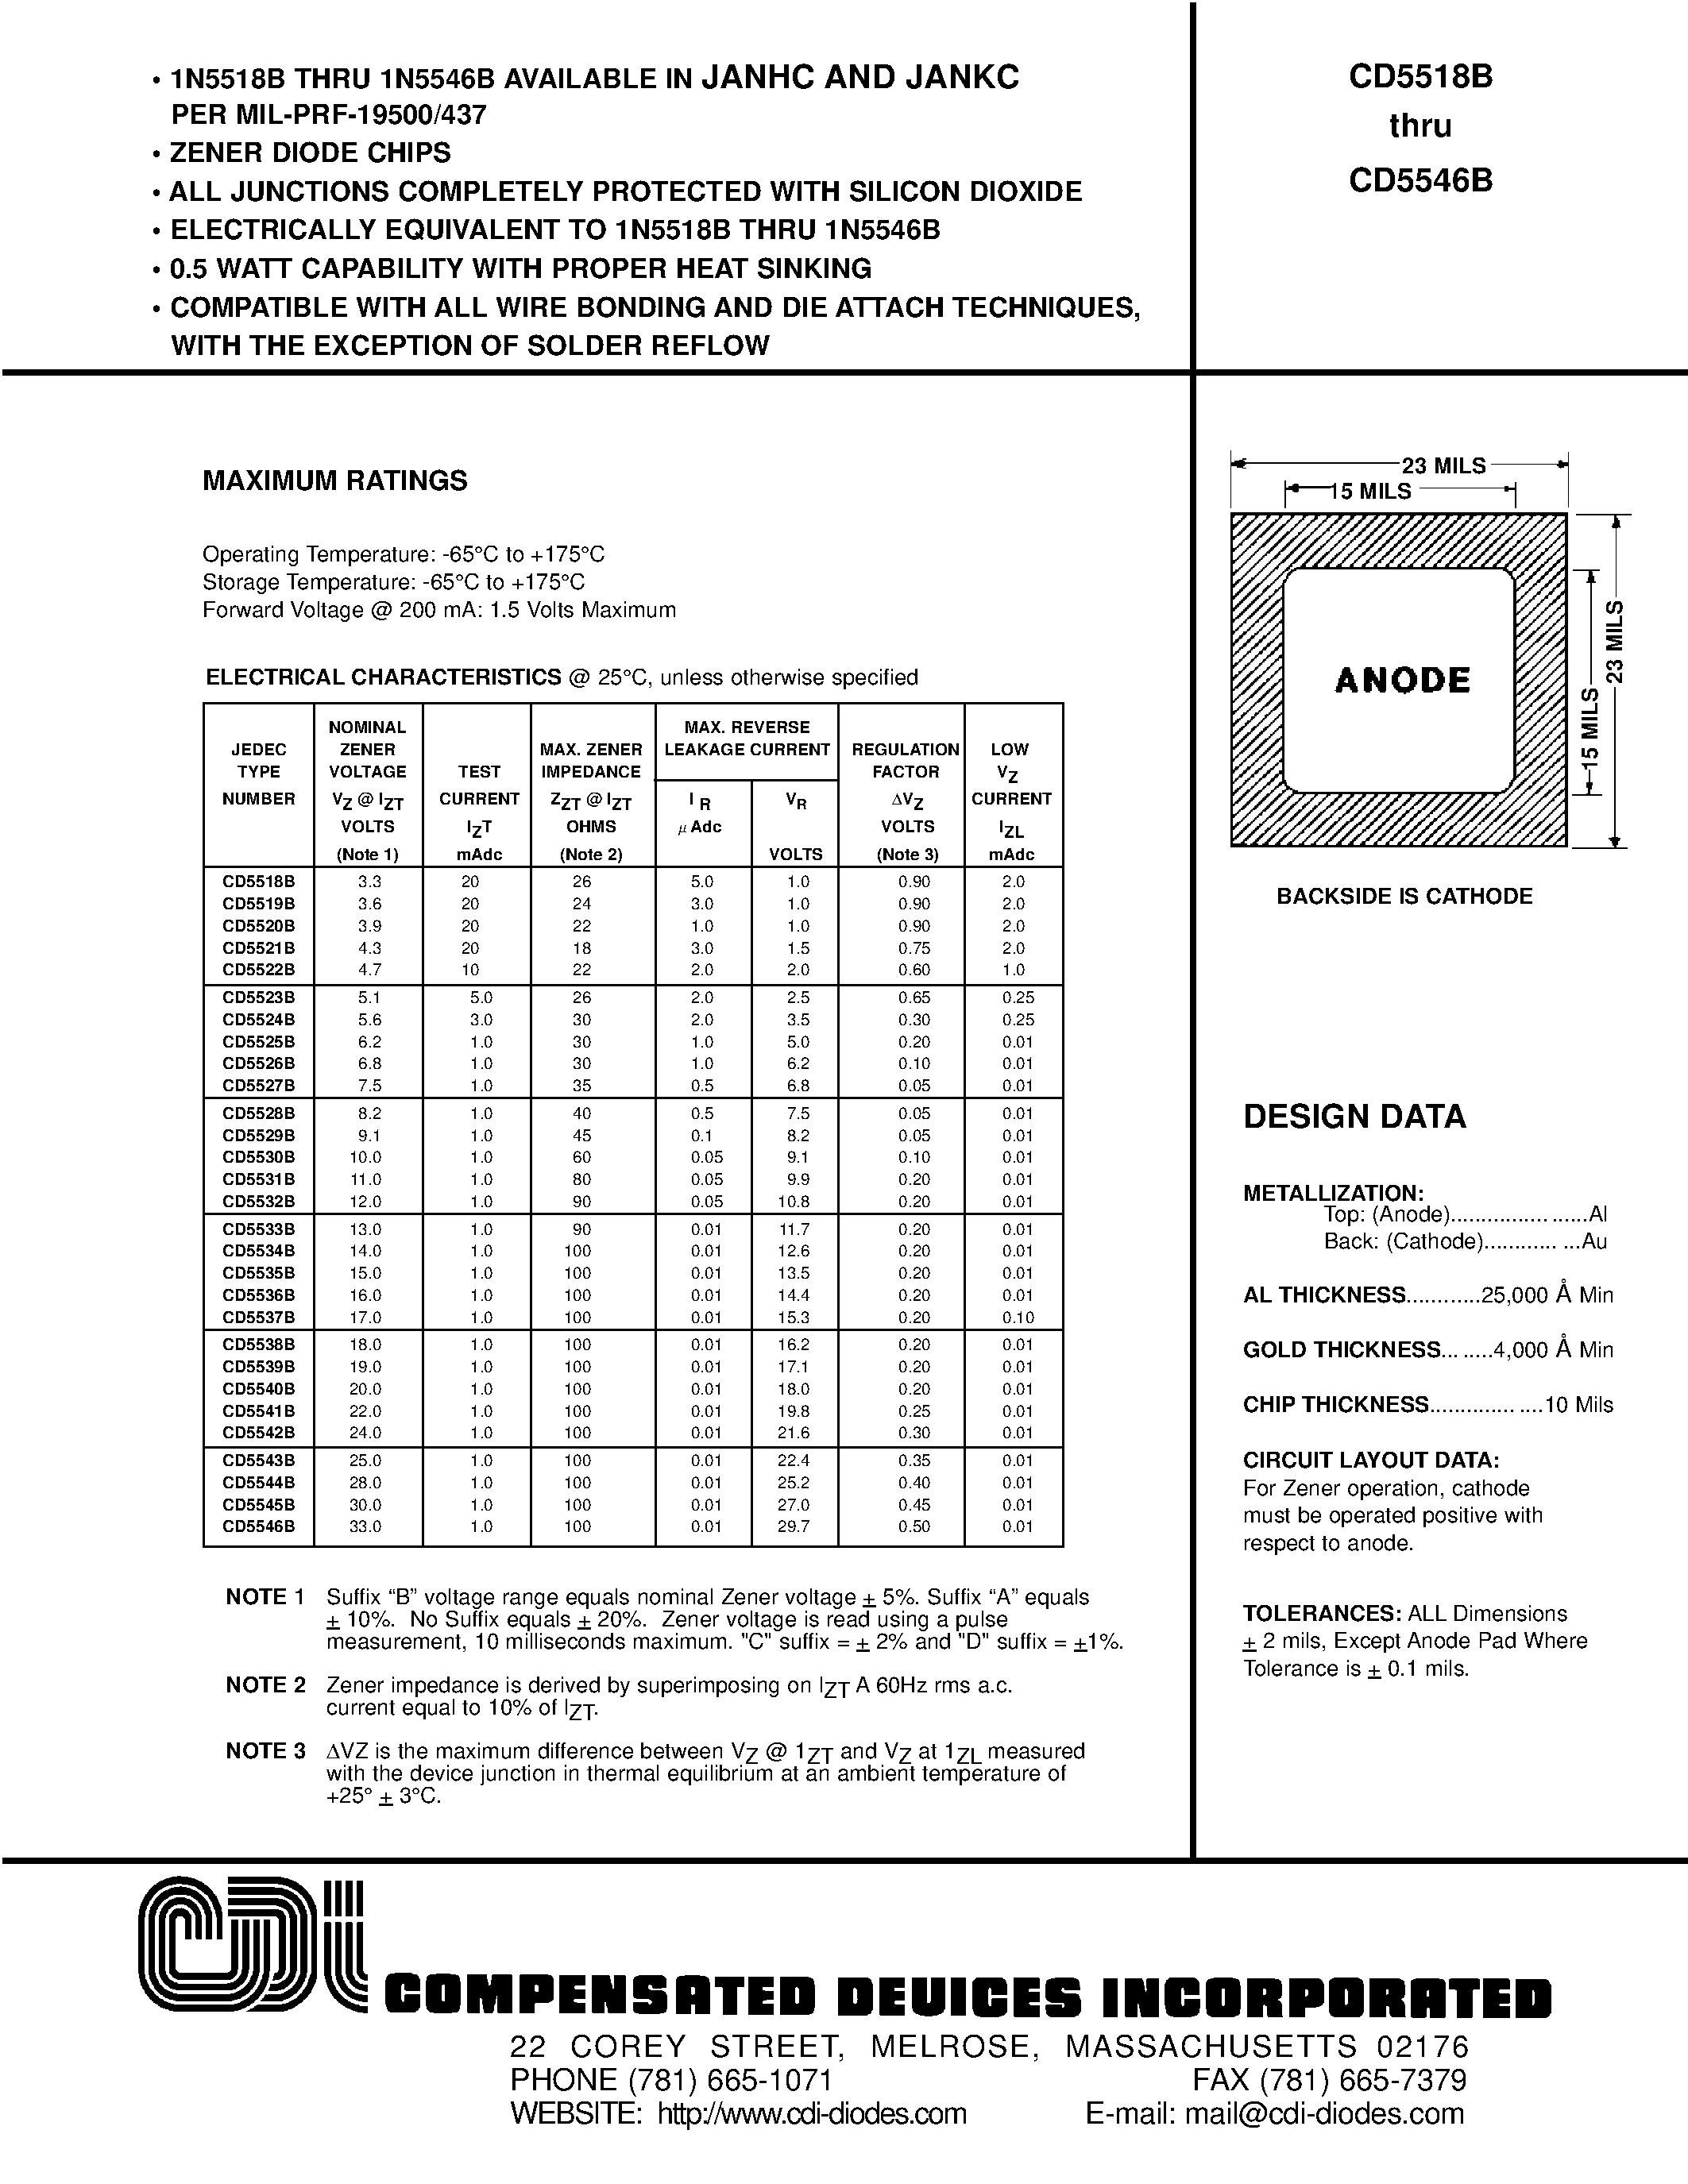 Datasheet CD5535B - ZENER DIODE CHIPS page 1